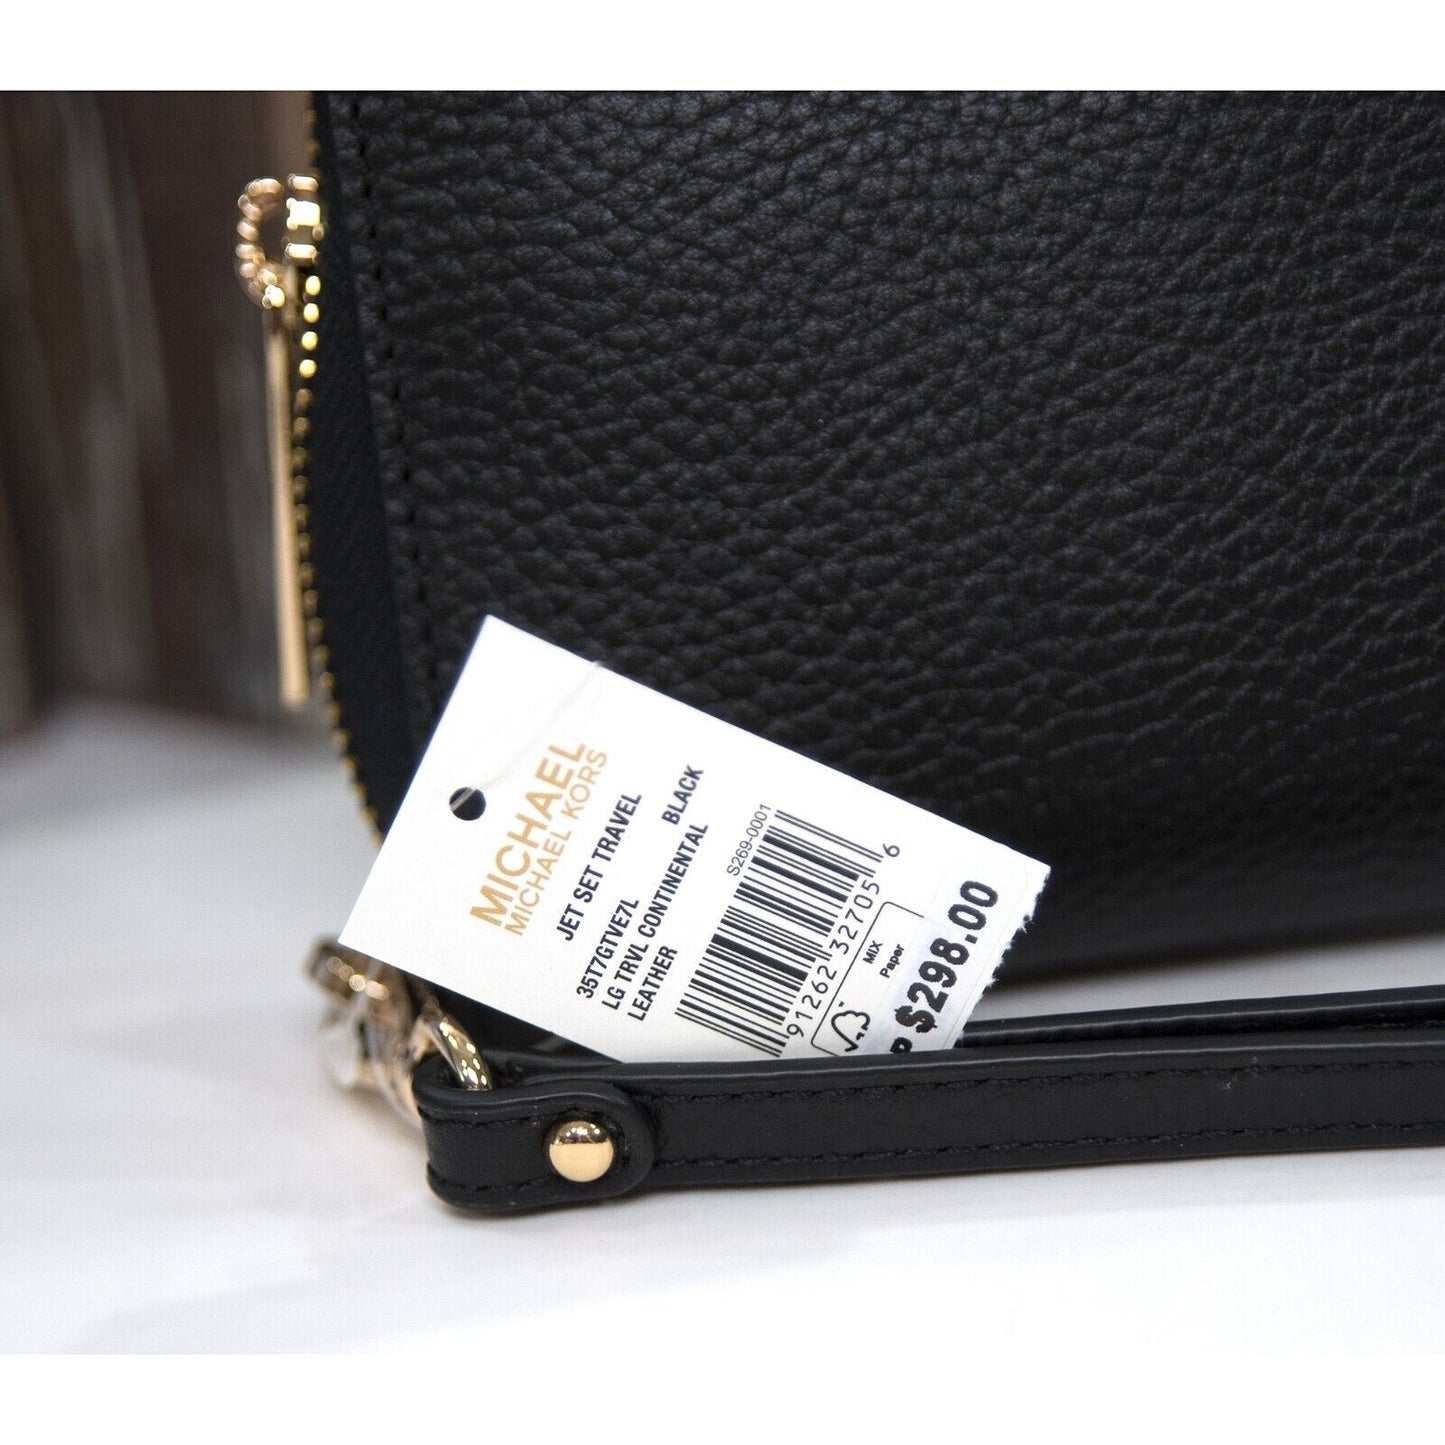 Michael Kors Black Pebbled Leather Zip Around Travel Wallet Wristlet NWT